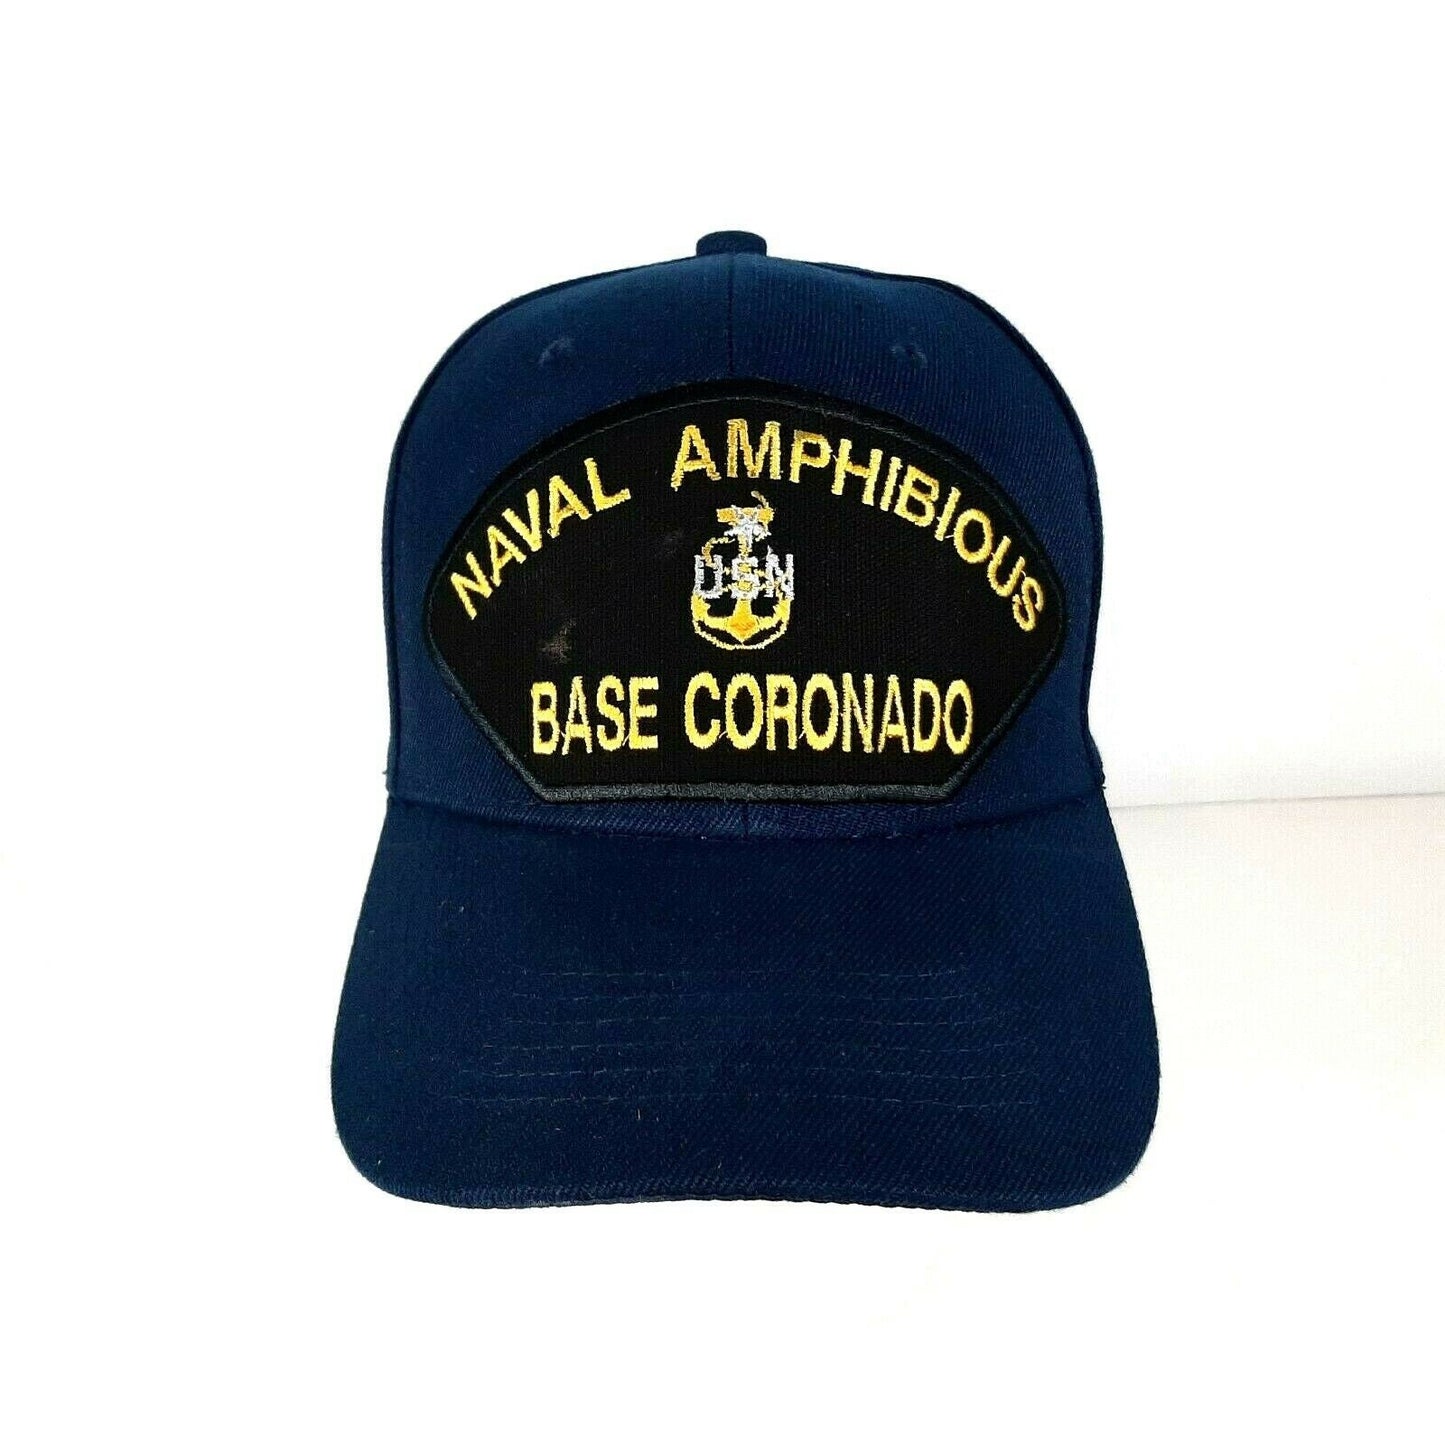 Naval Amphibious Base Coronado Mens Baseball Cap Hat Blue Embroidered Patch